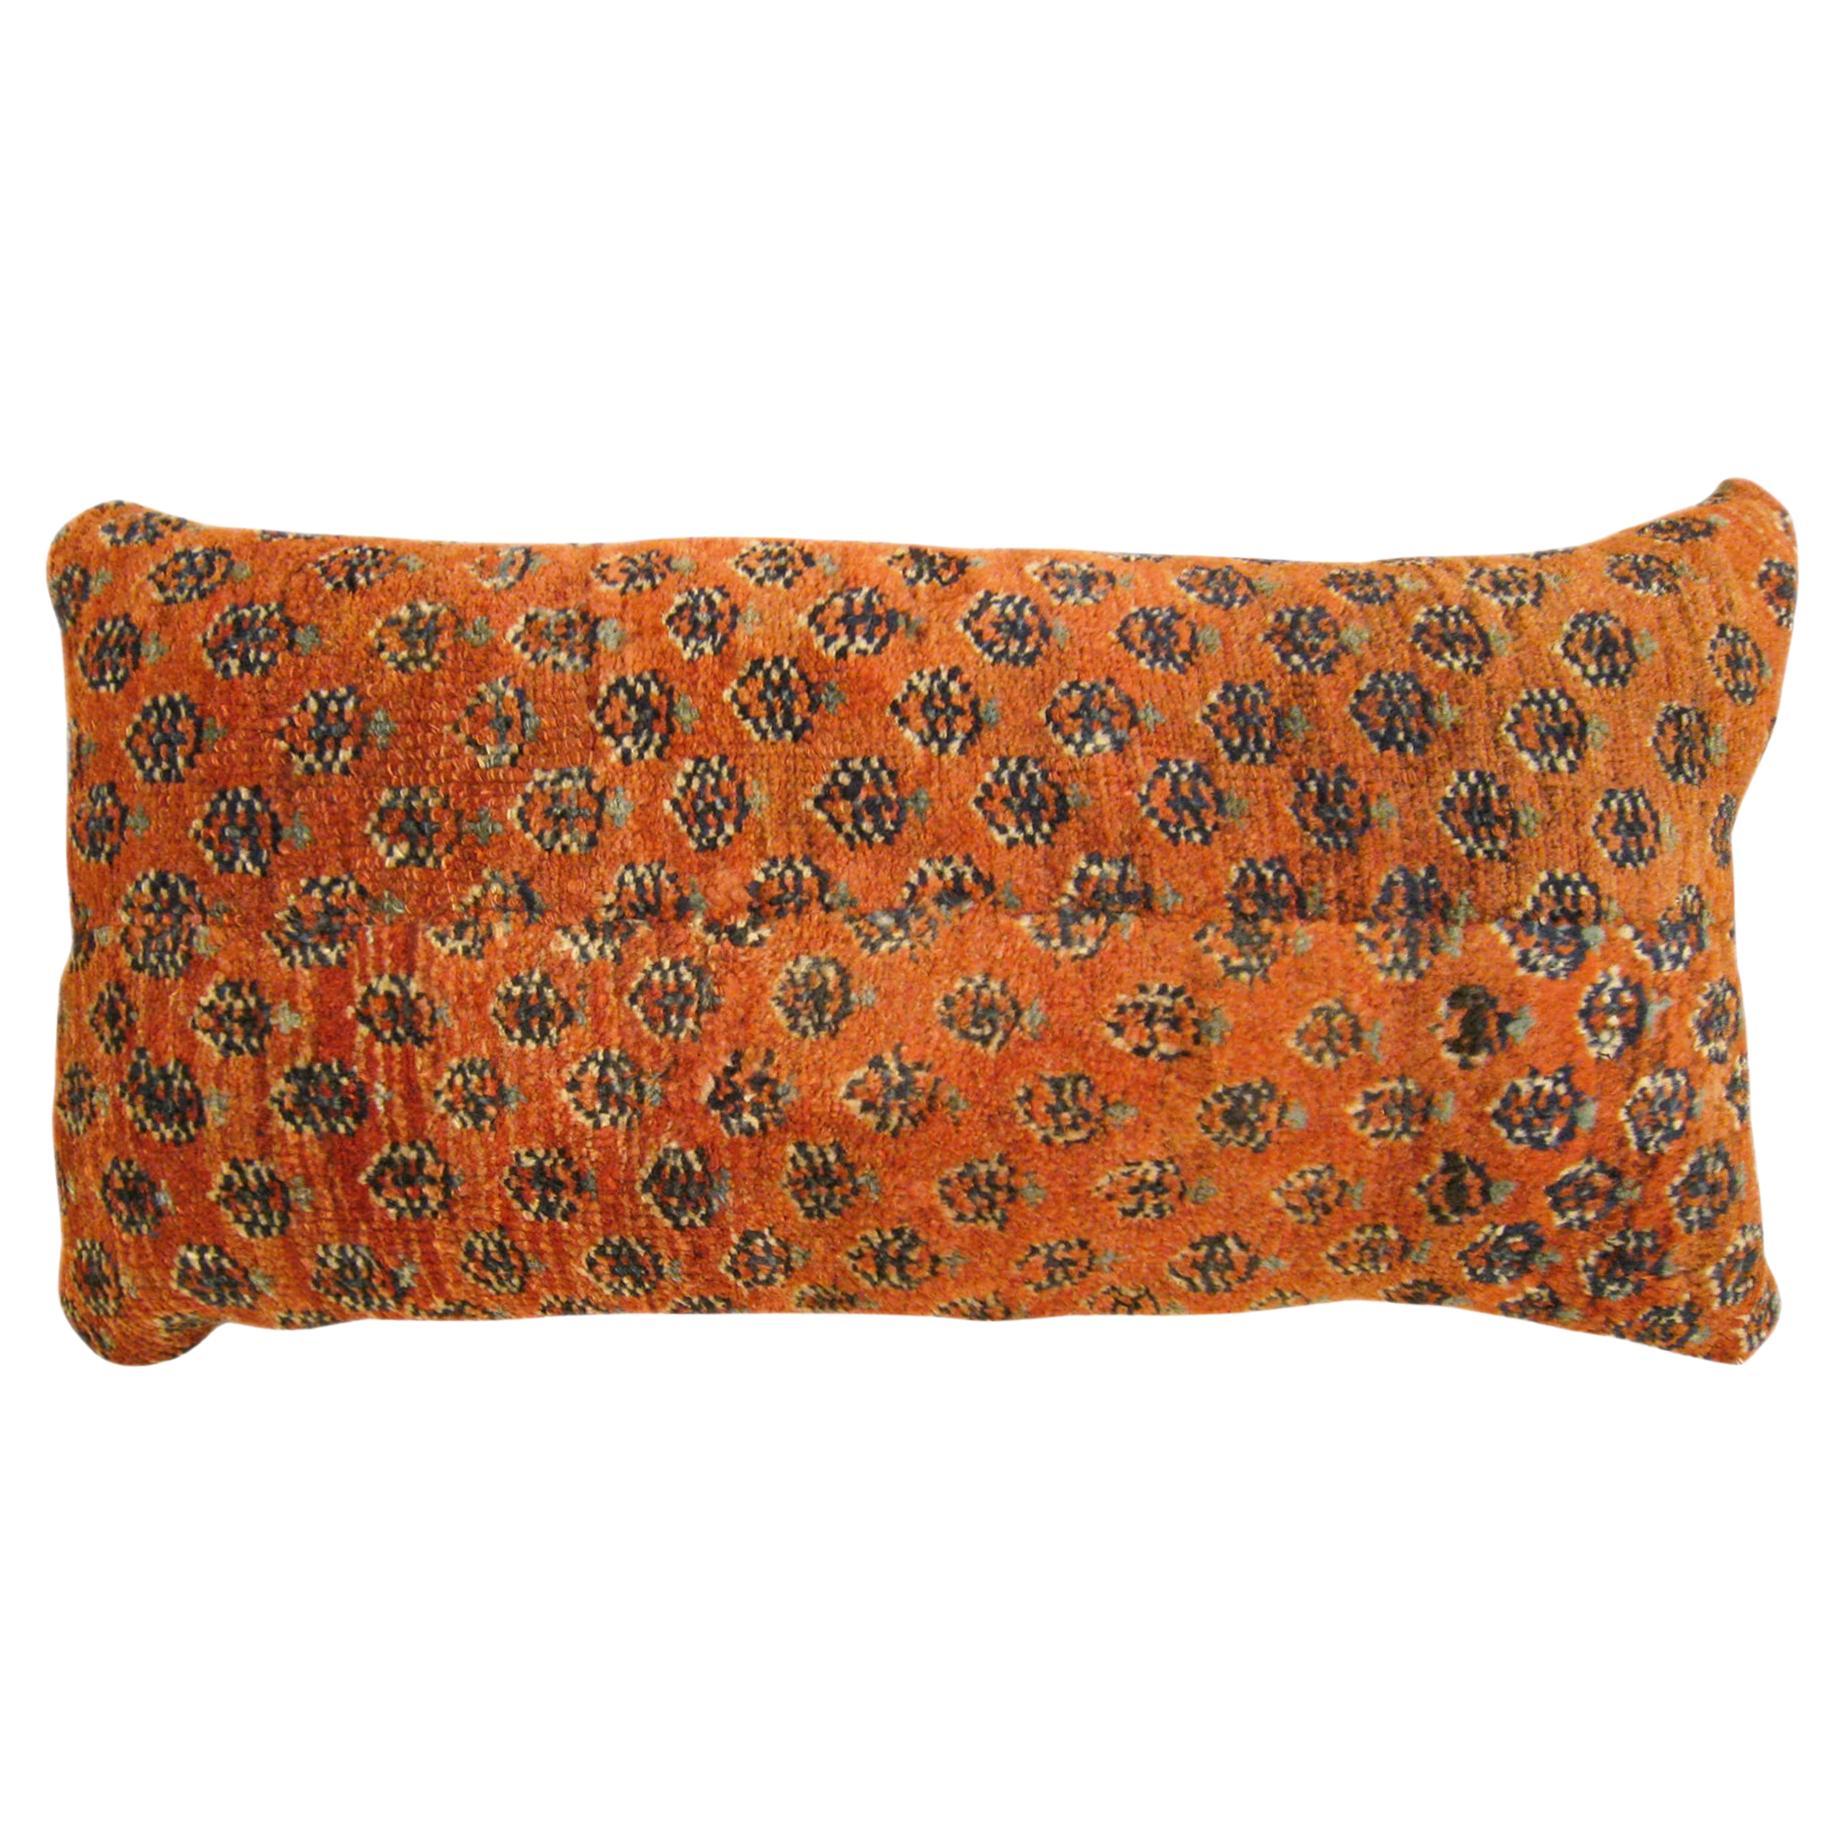 Decorative Antique Persian Saraband Carpet Pillow with Floral Elements